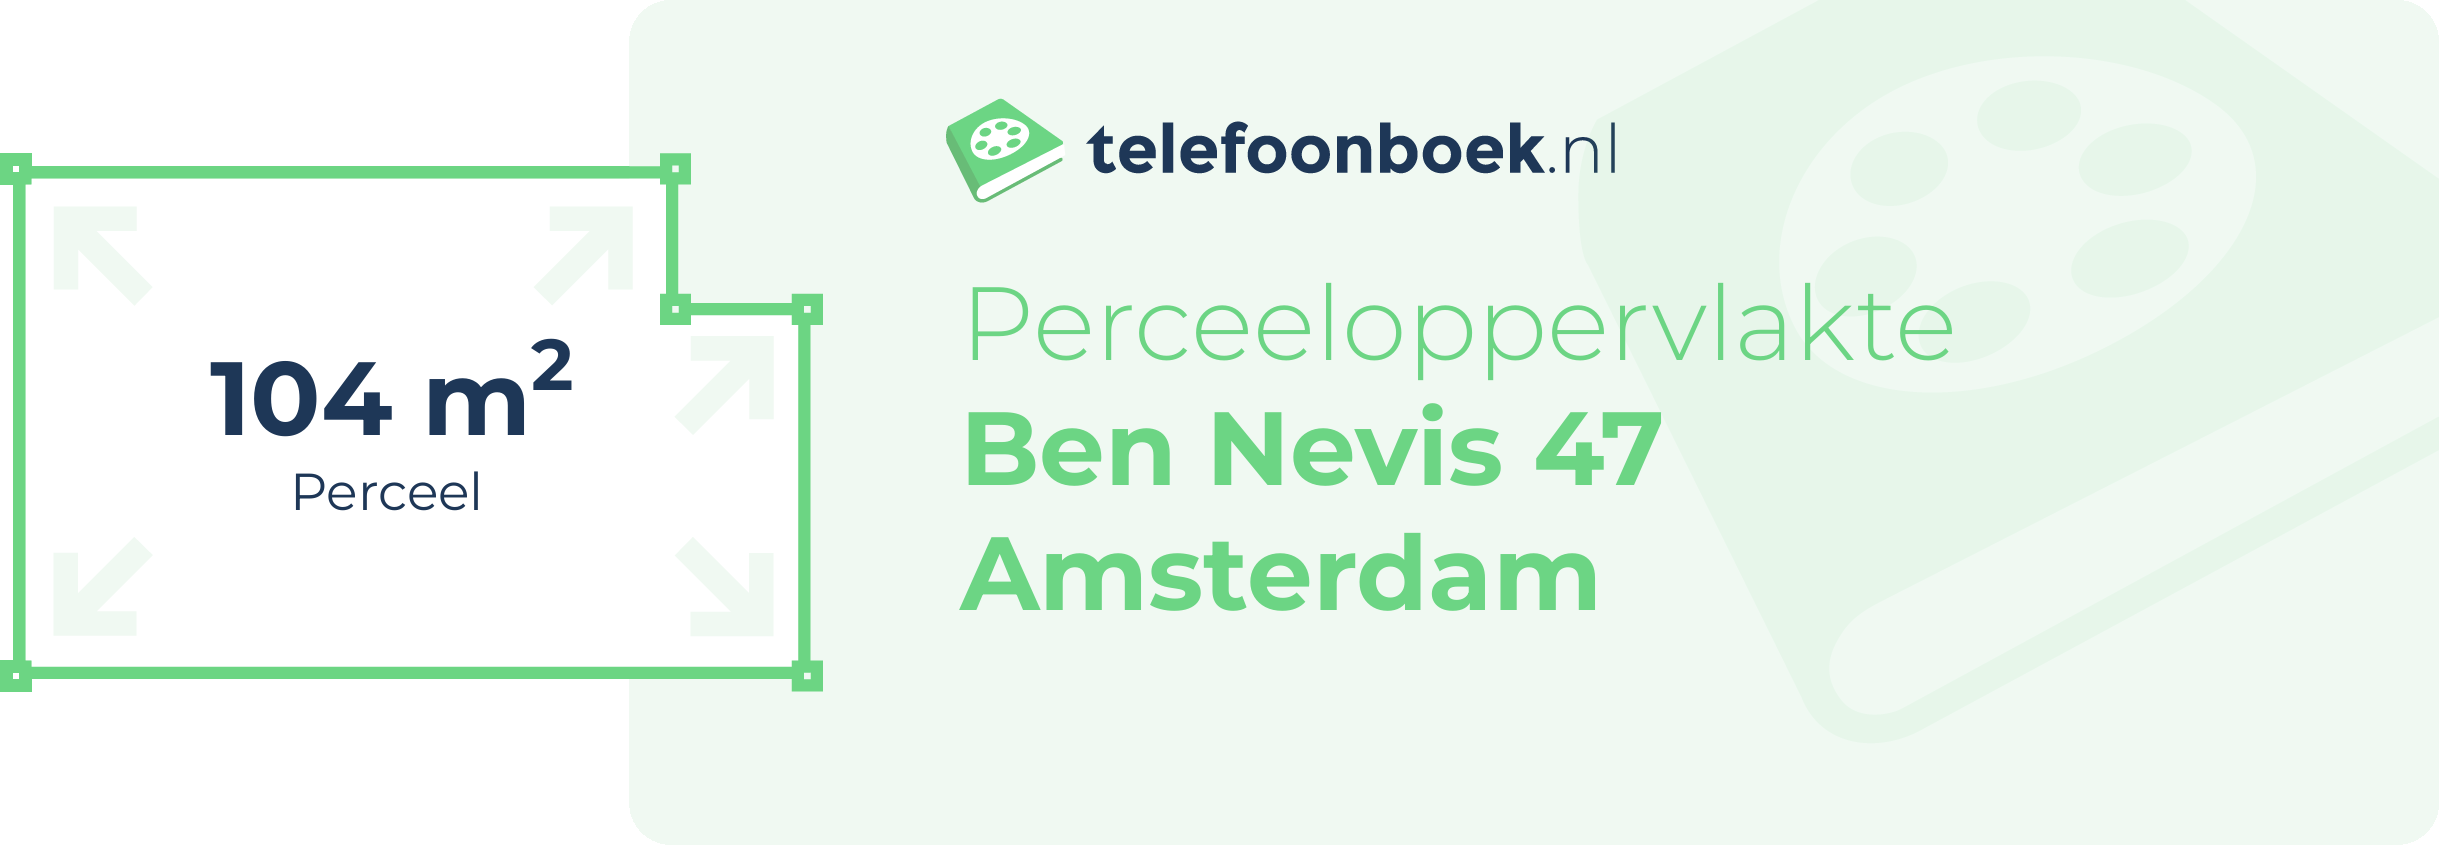 Perceeloppervlakte Ben Nevis 47 Amsterdam